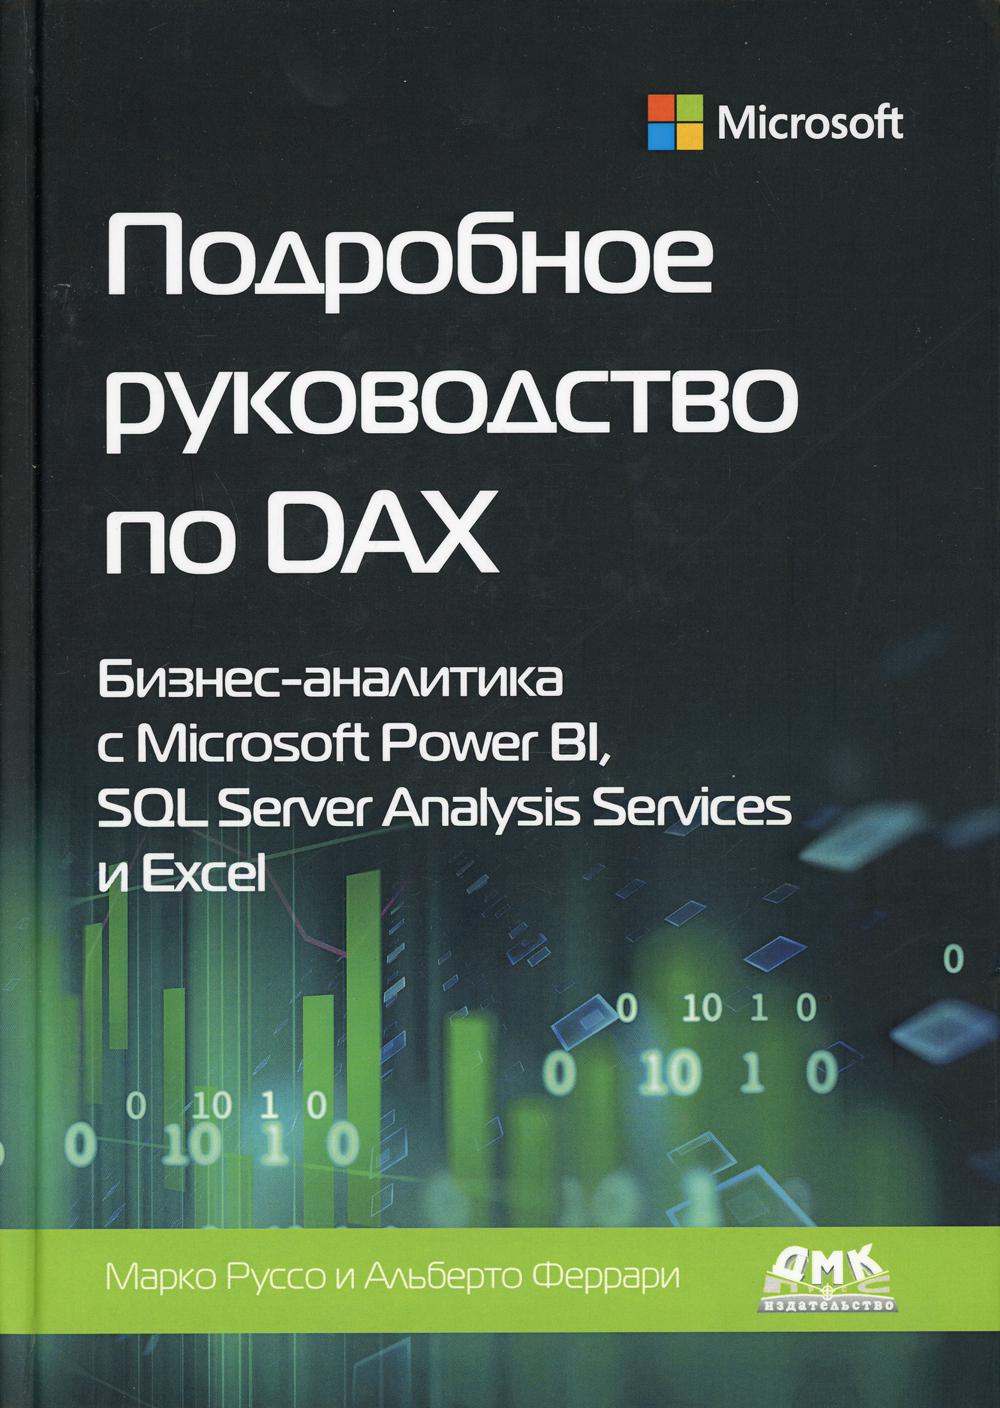    DAX: -  Microsoft Power BI, SQL Server Analysis Services  Excel